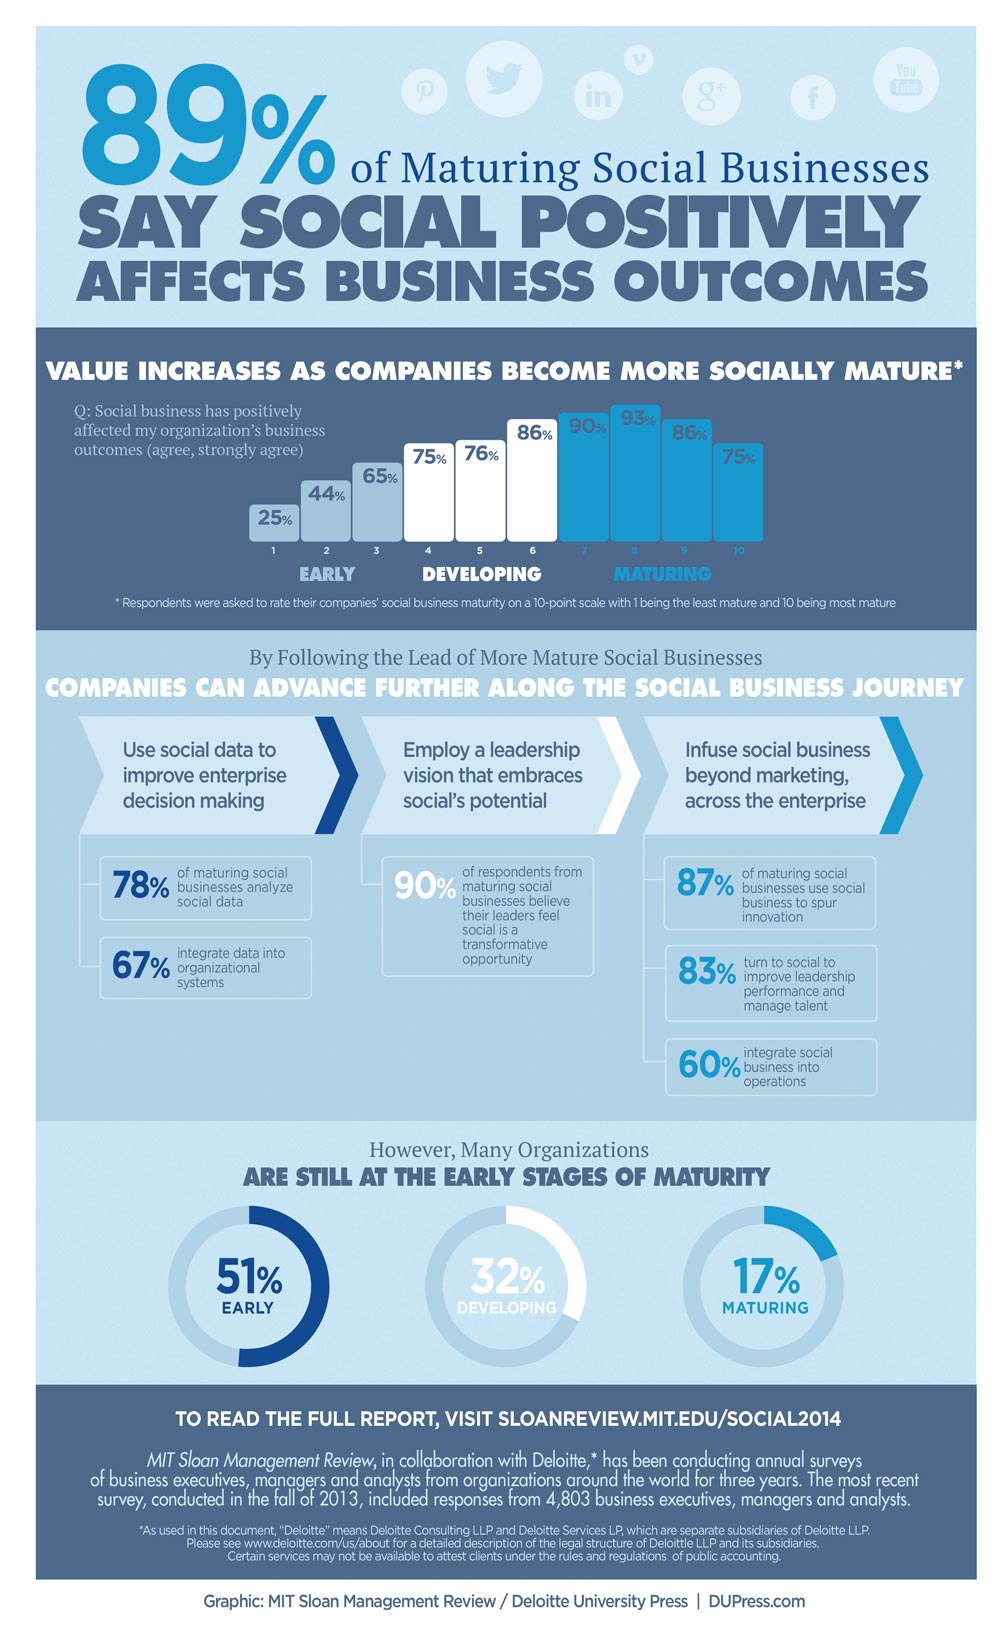 Moving beyond marketing: Generating social business value across the enterprise